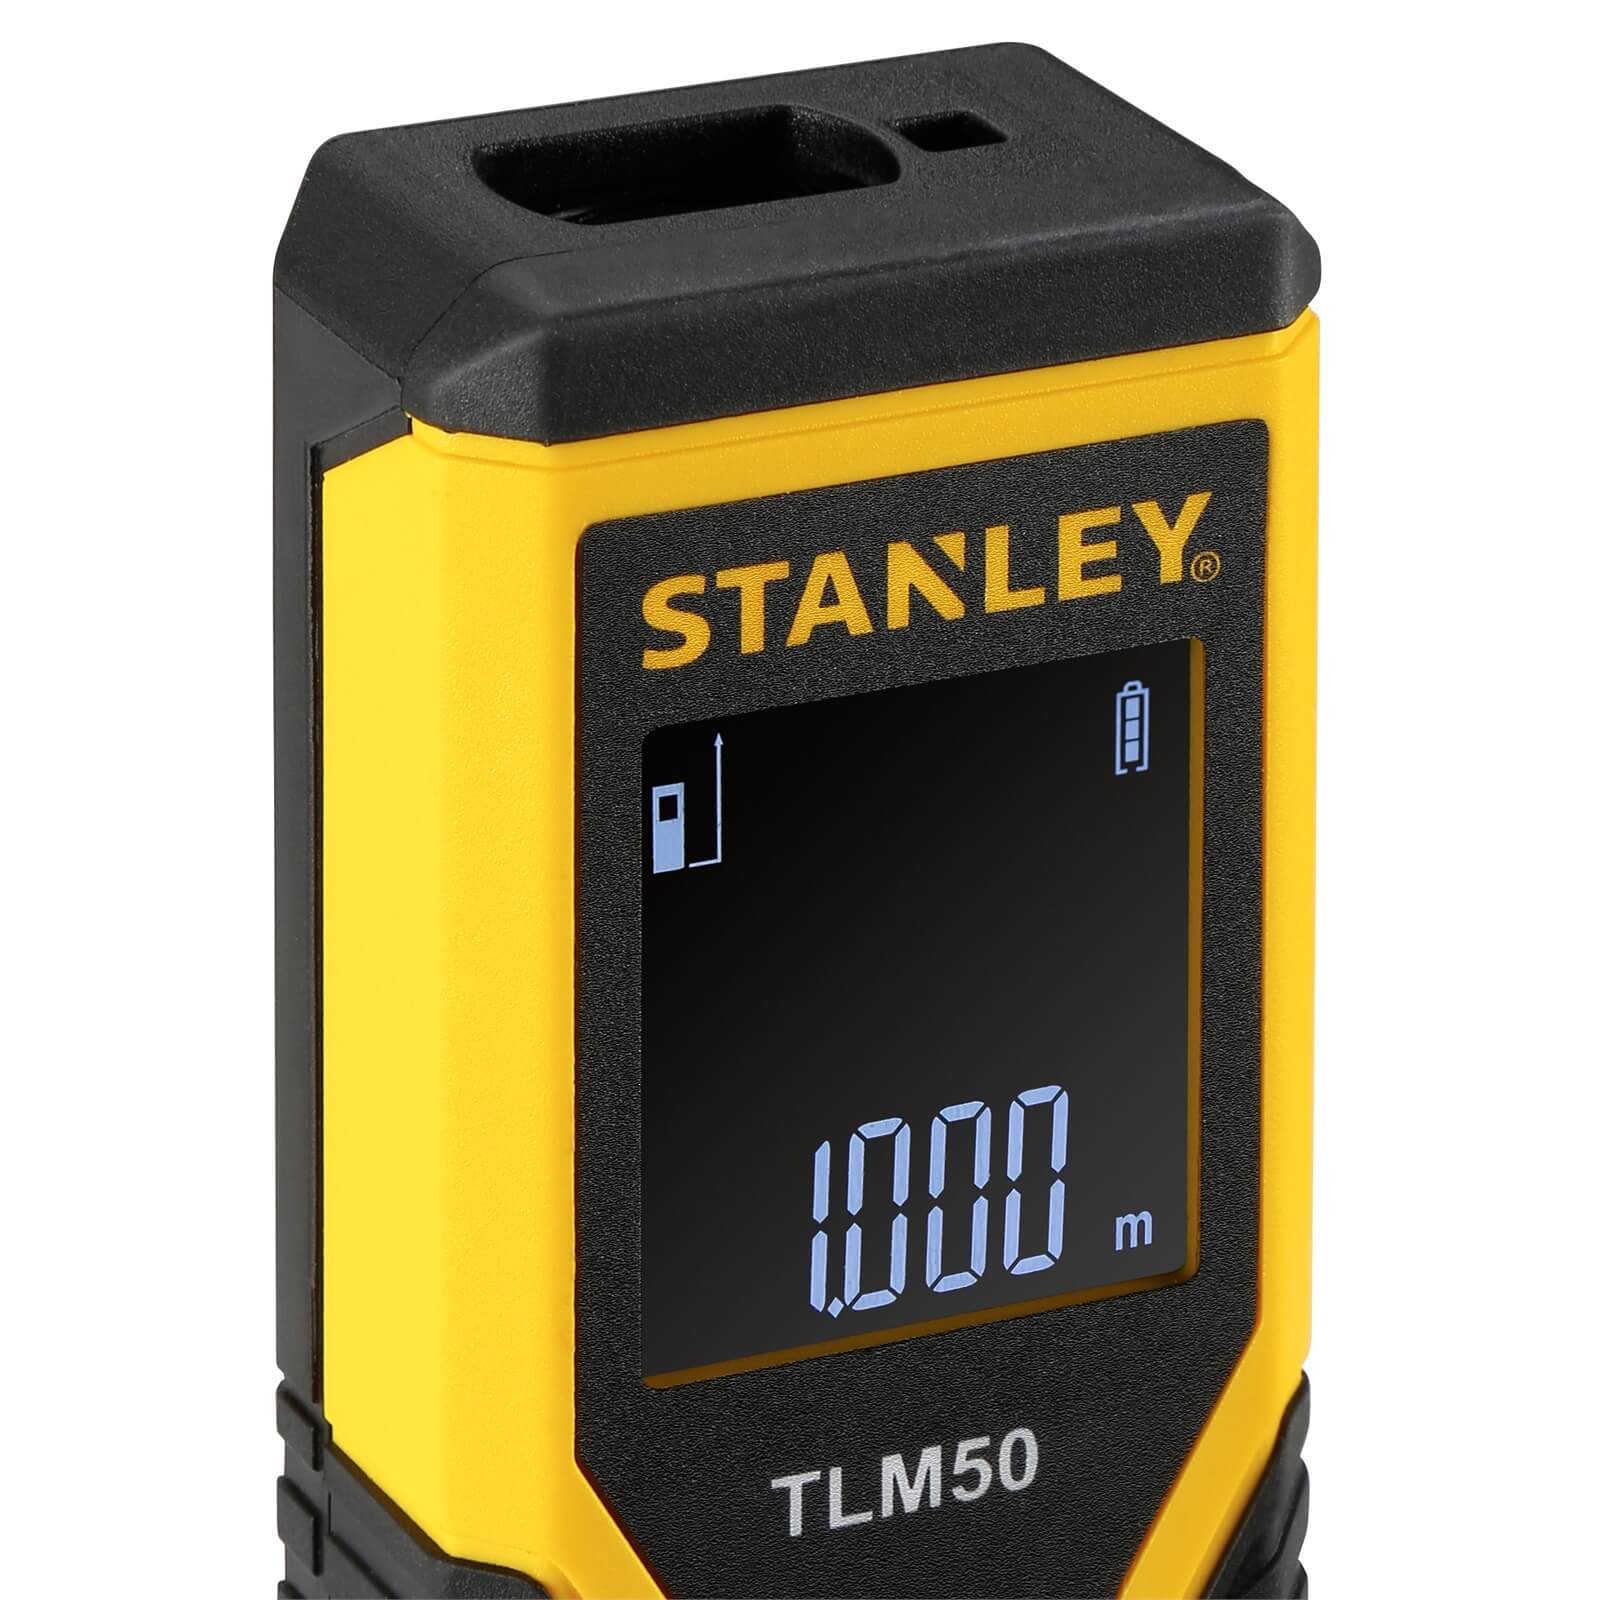 STANLEY 15m Laser Distance Measure